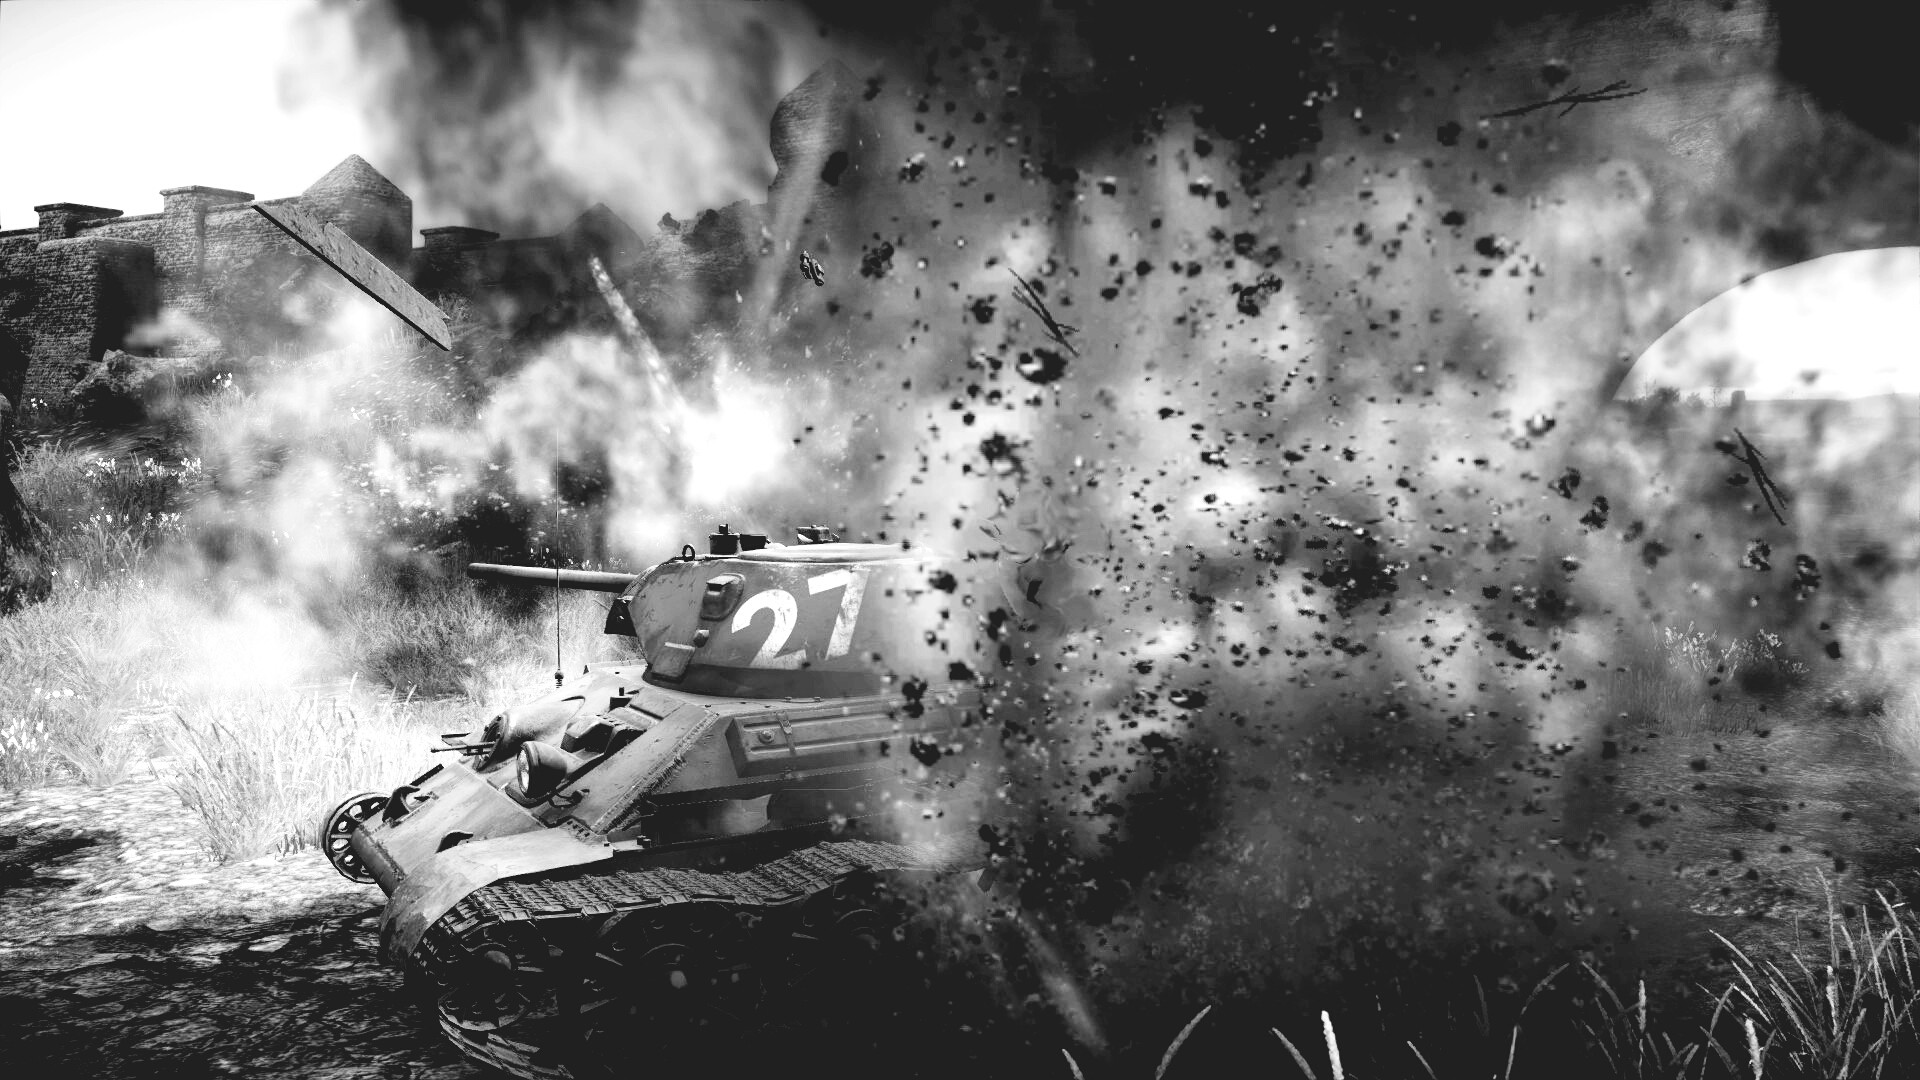 General 1920x1080 War Thunder war T-34 tank dirt explosion gray